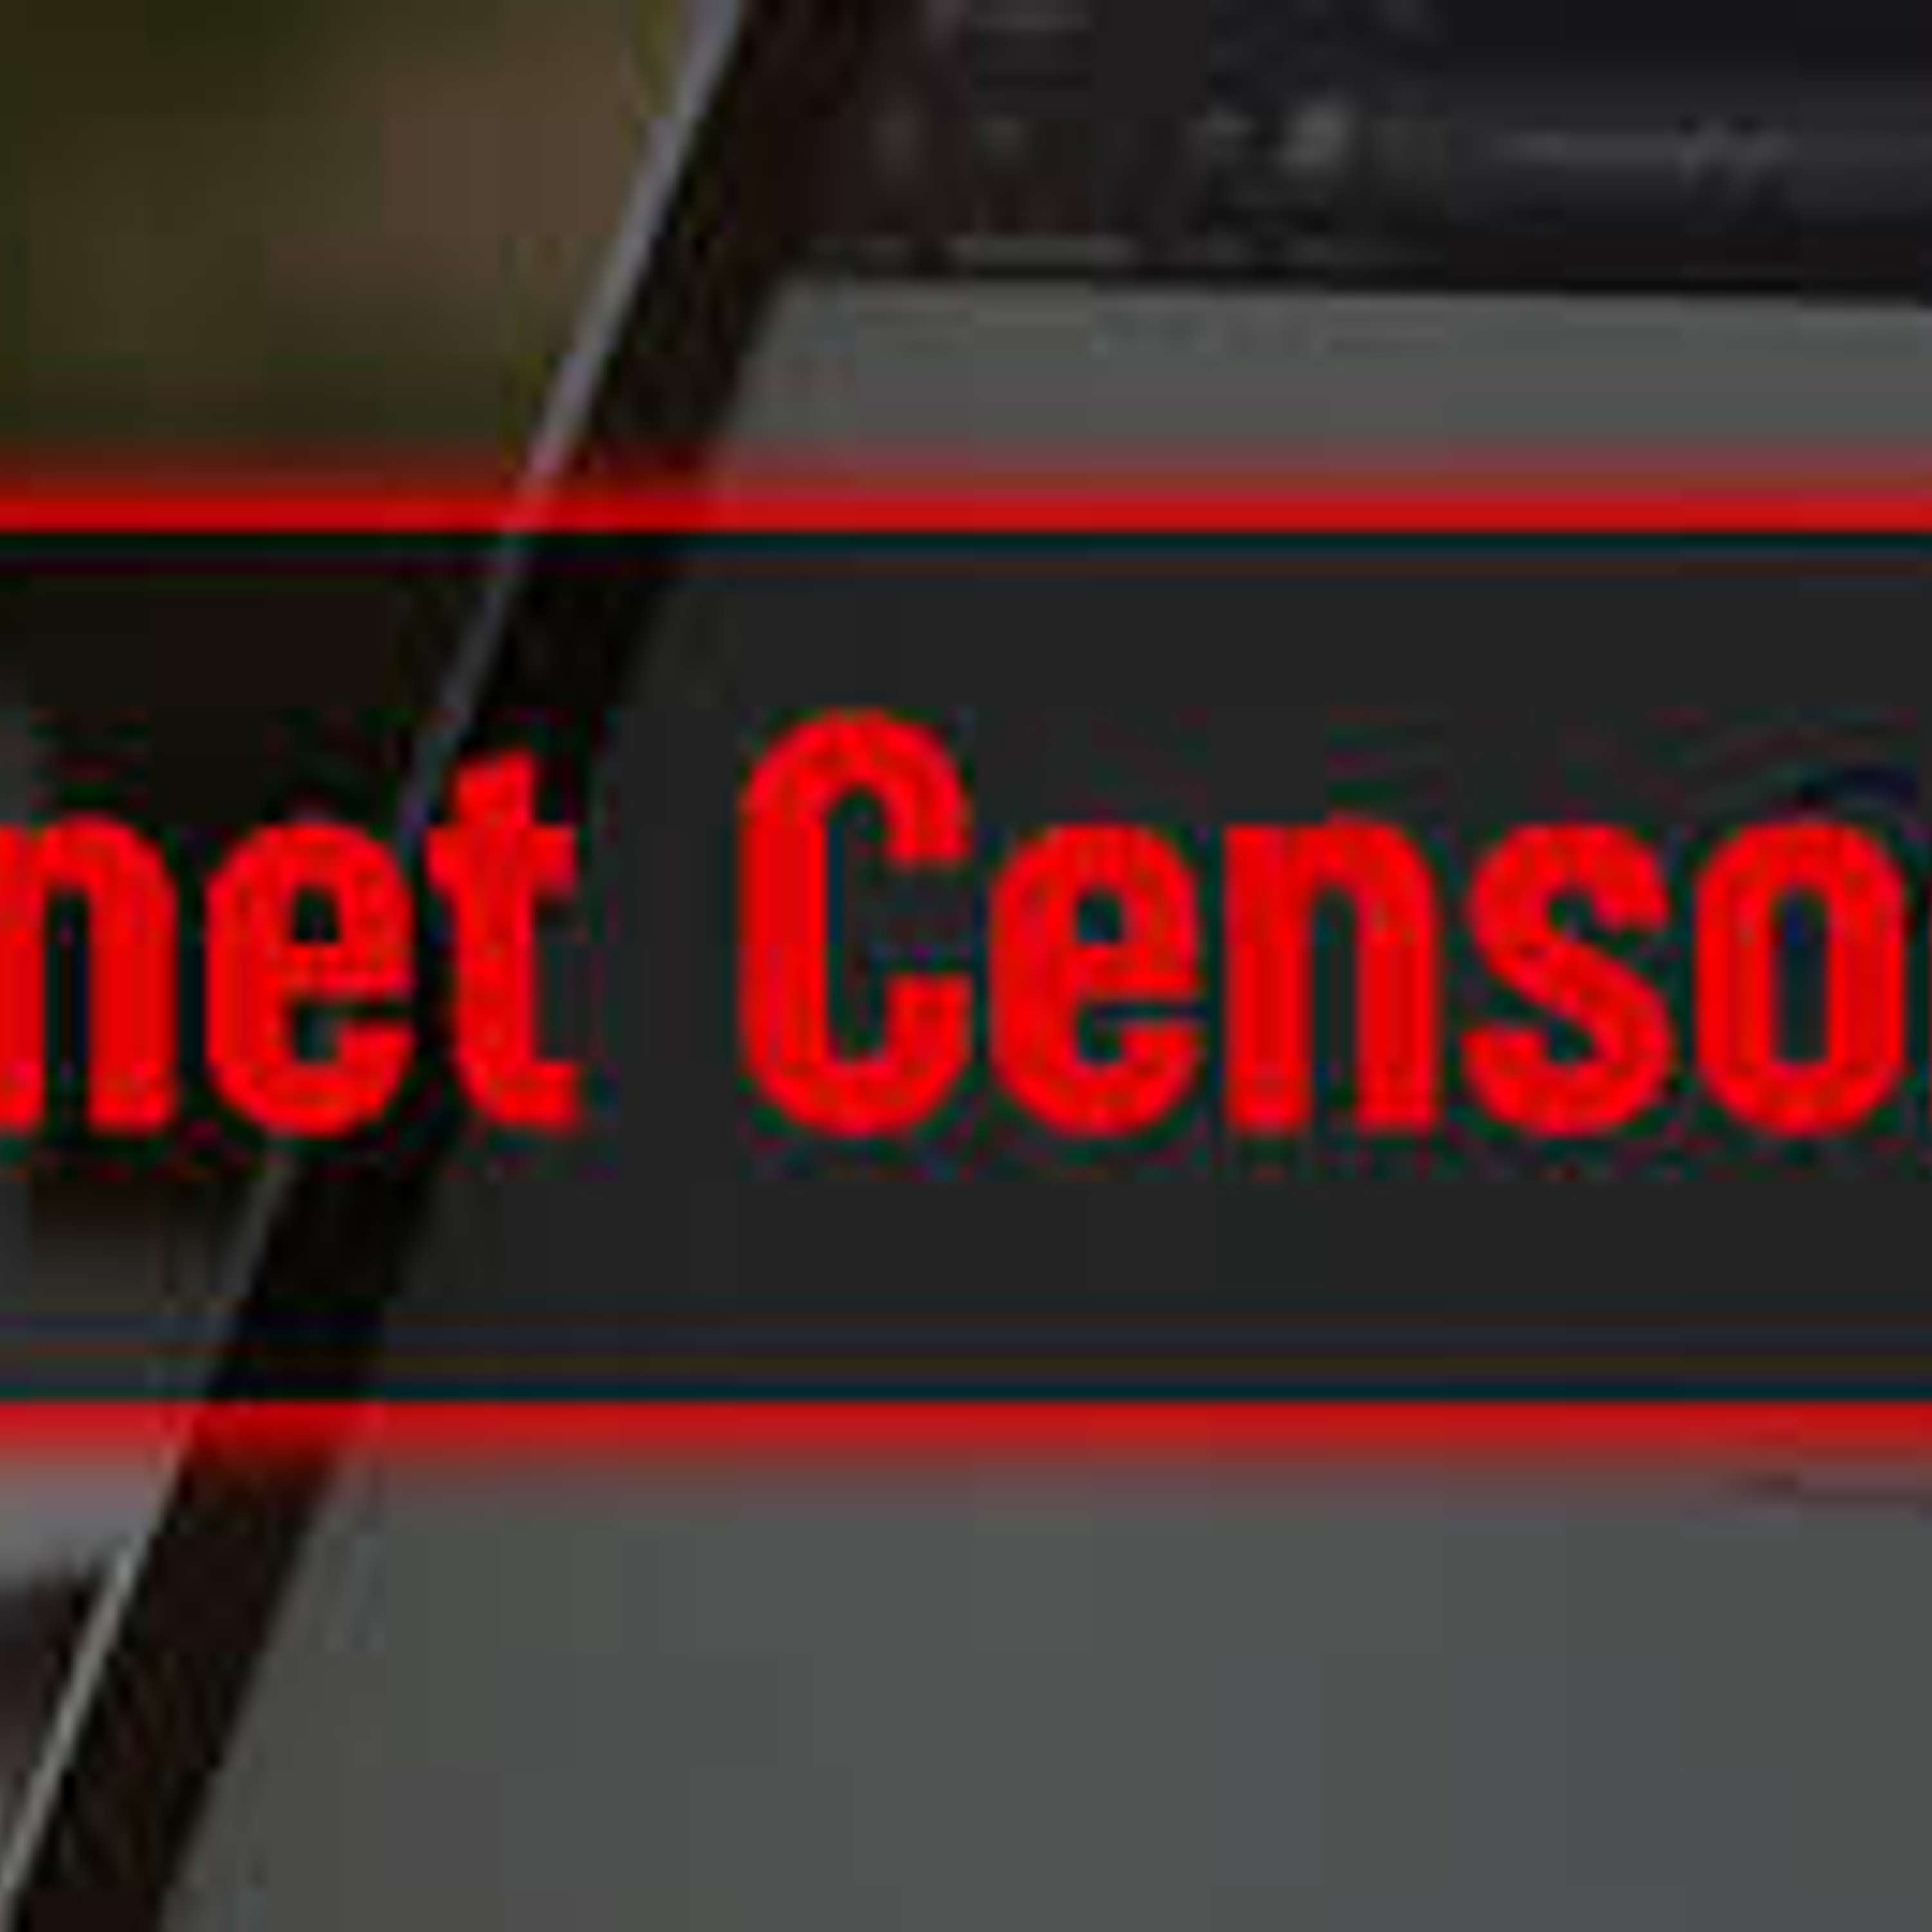 Internet Censorship - Informational Version